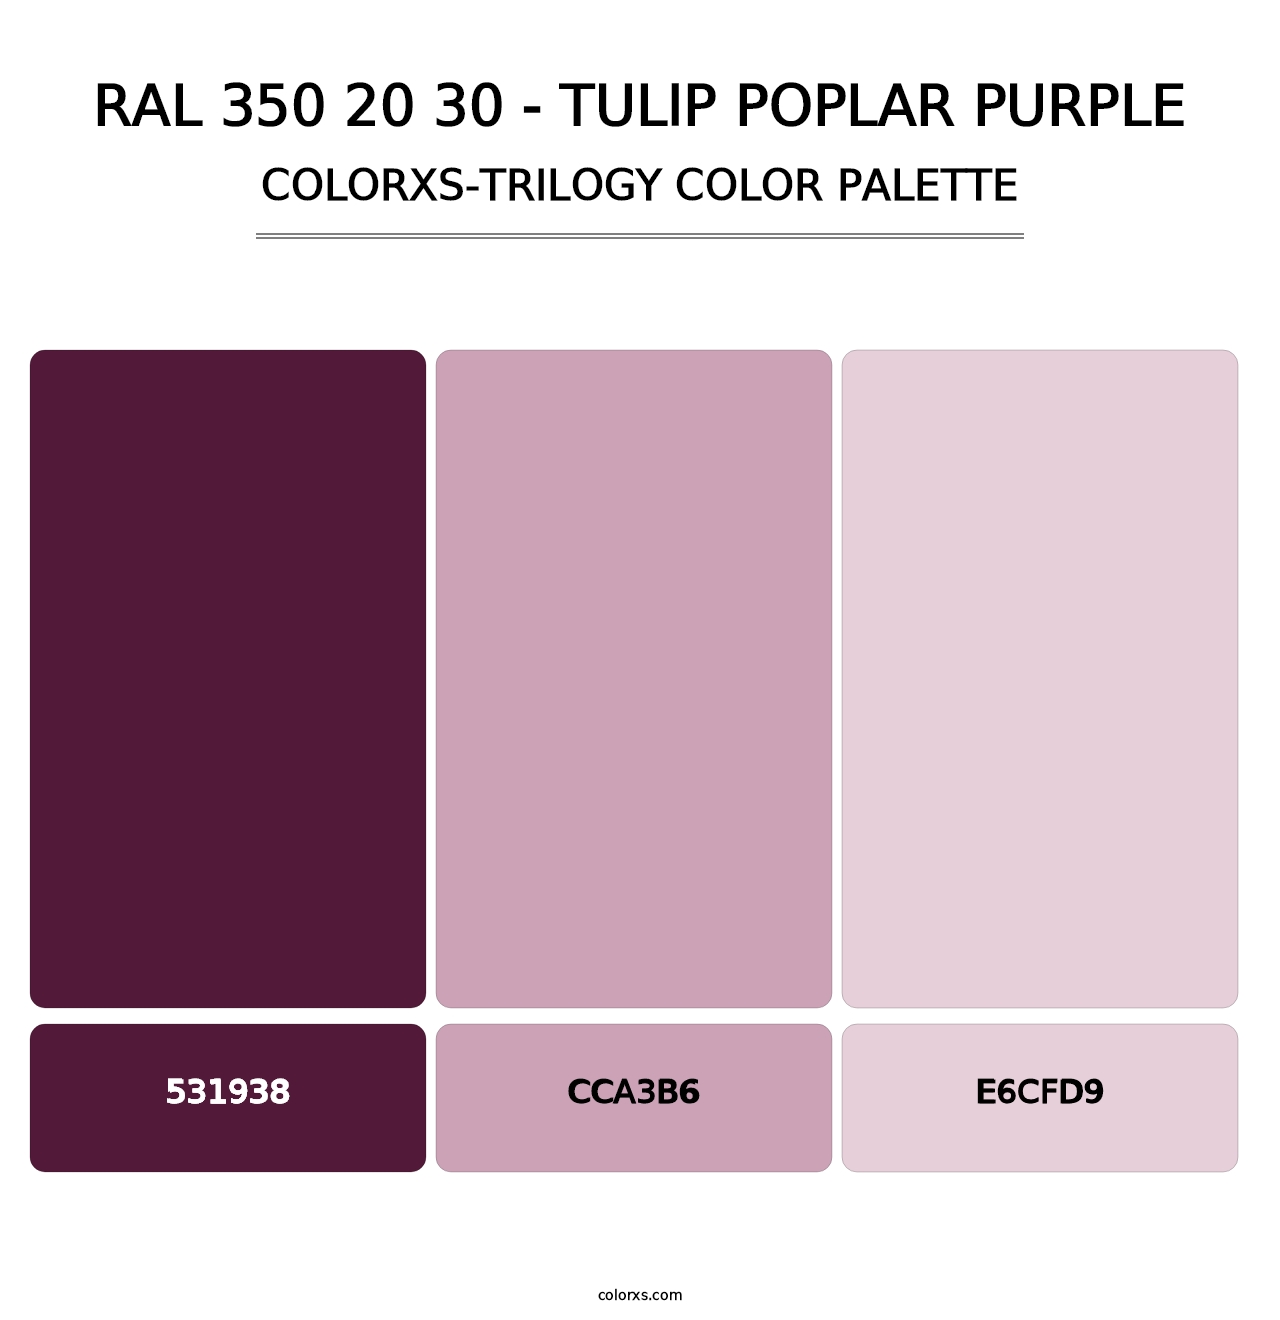 RAL 350 20 30 - Tulip Poplar Purple - Colorxs Trilogy Palette